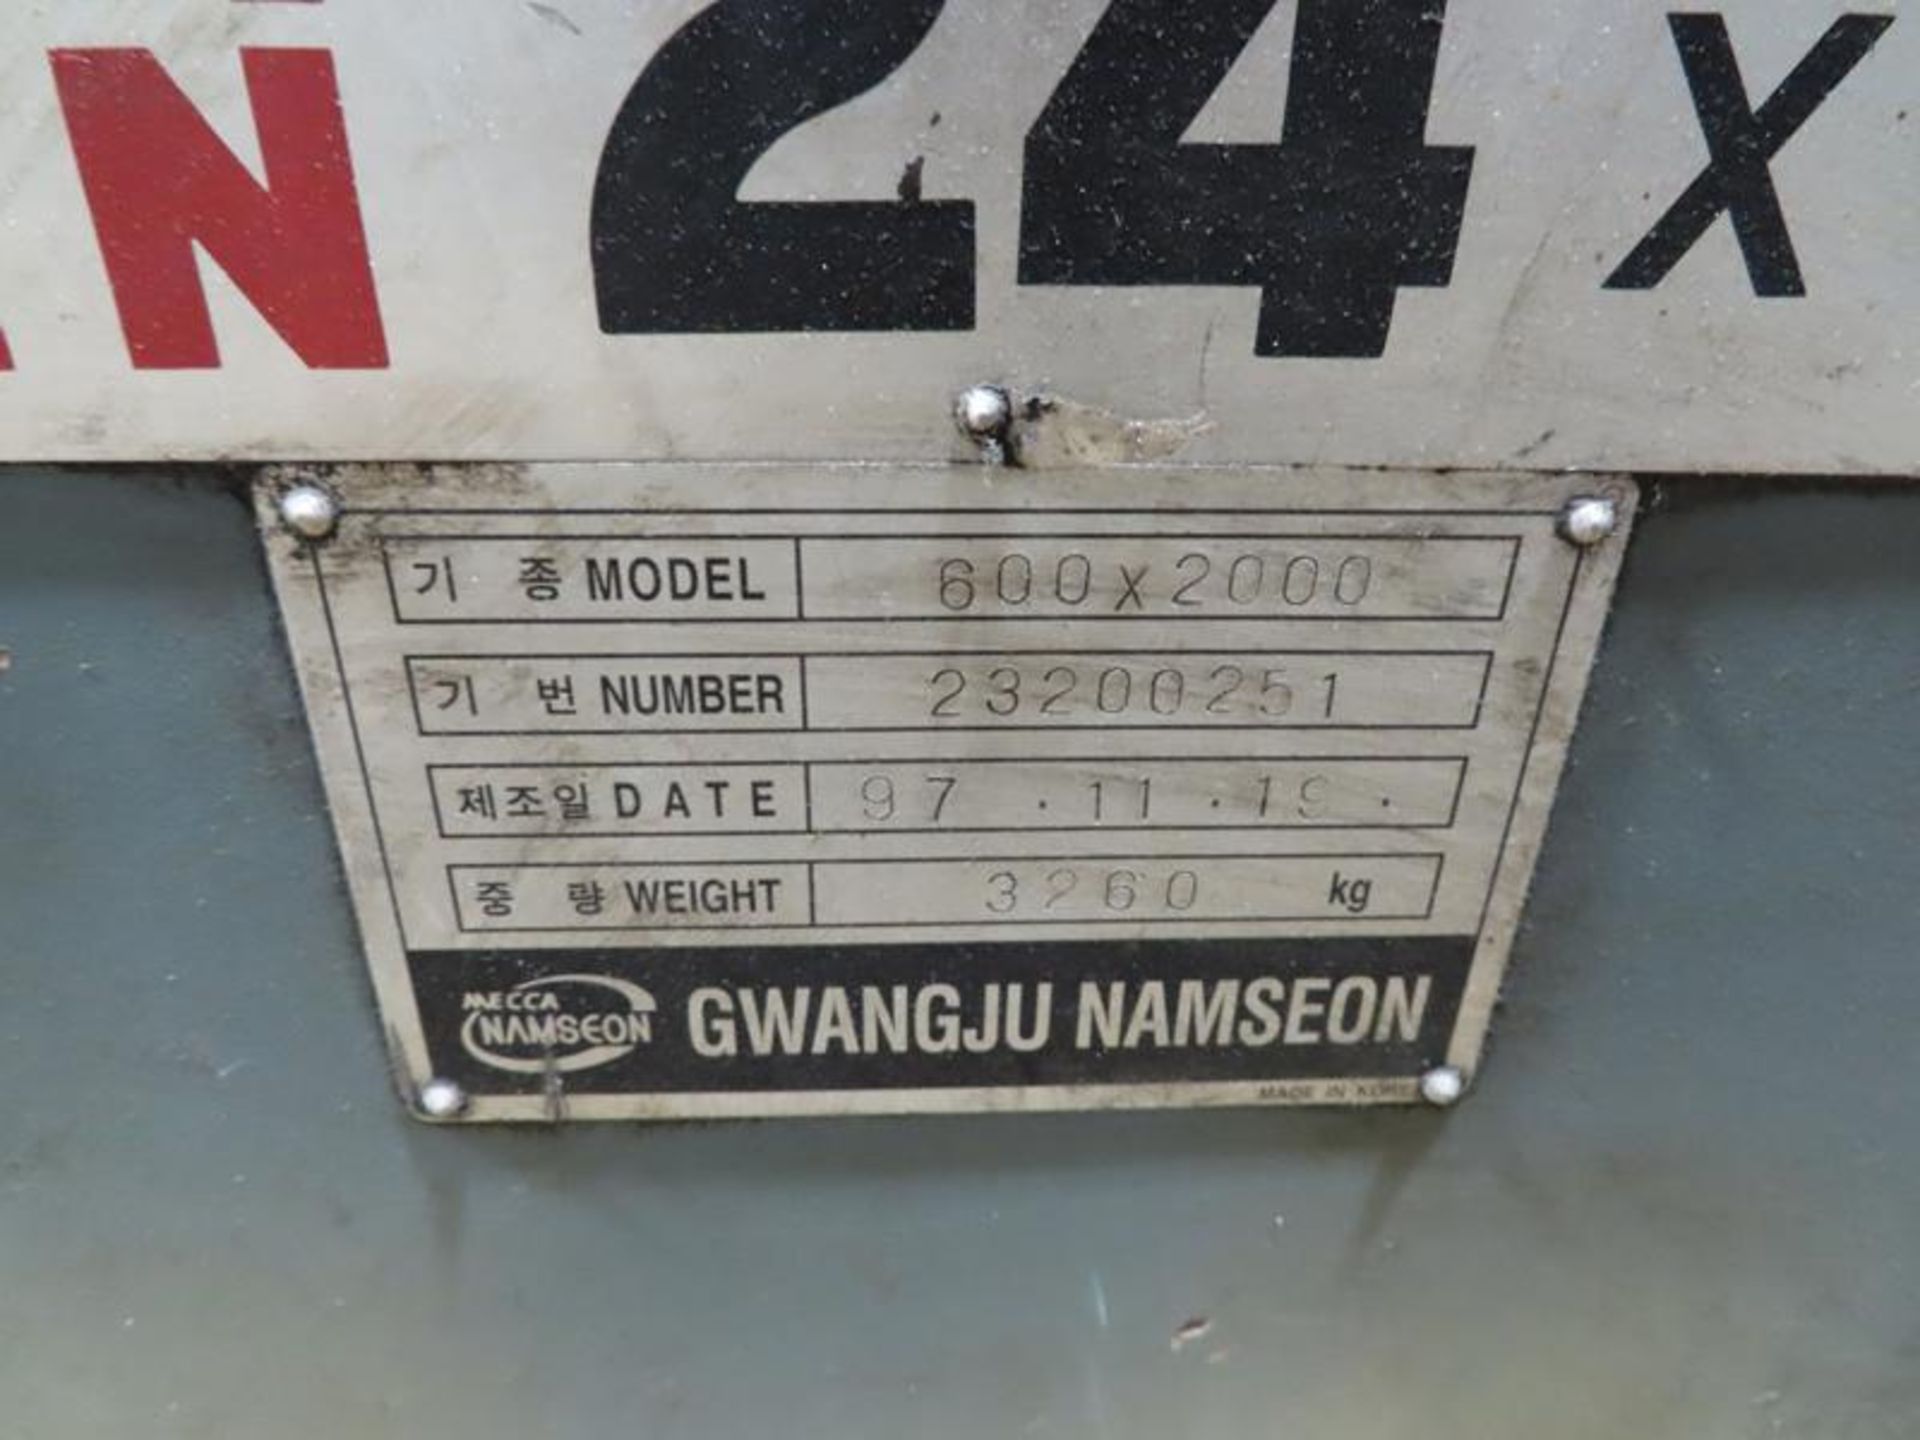 Gwangju Namseon Acraturn 600X2000 Gap Bed Engine Lathe - Image 6 of 7